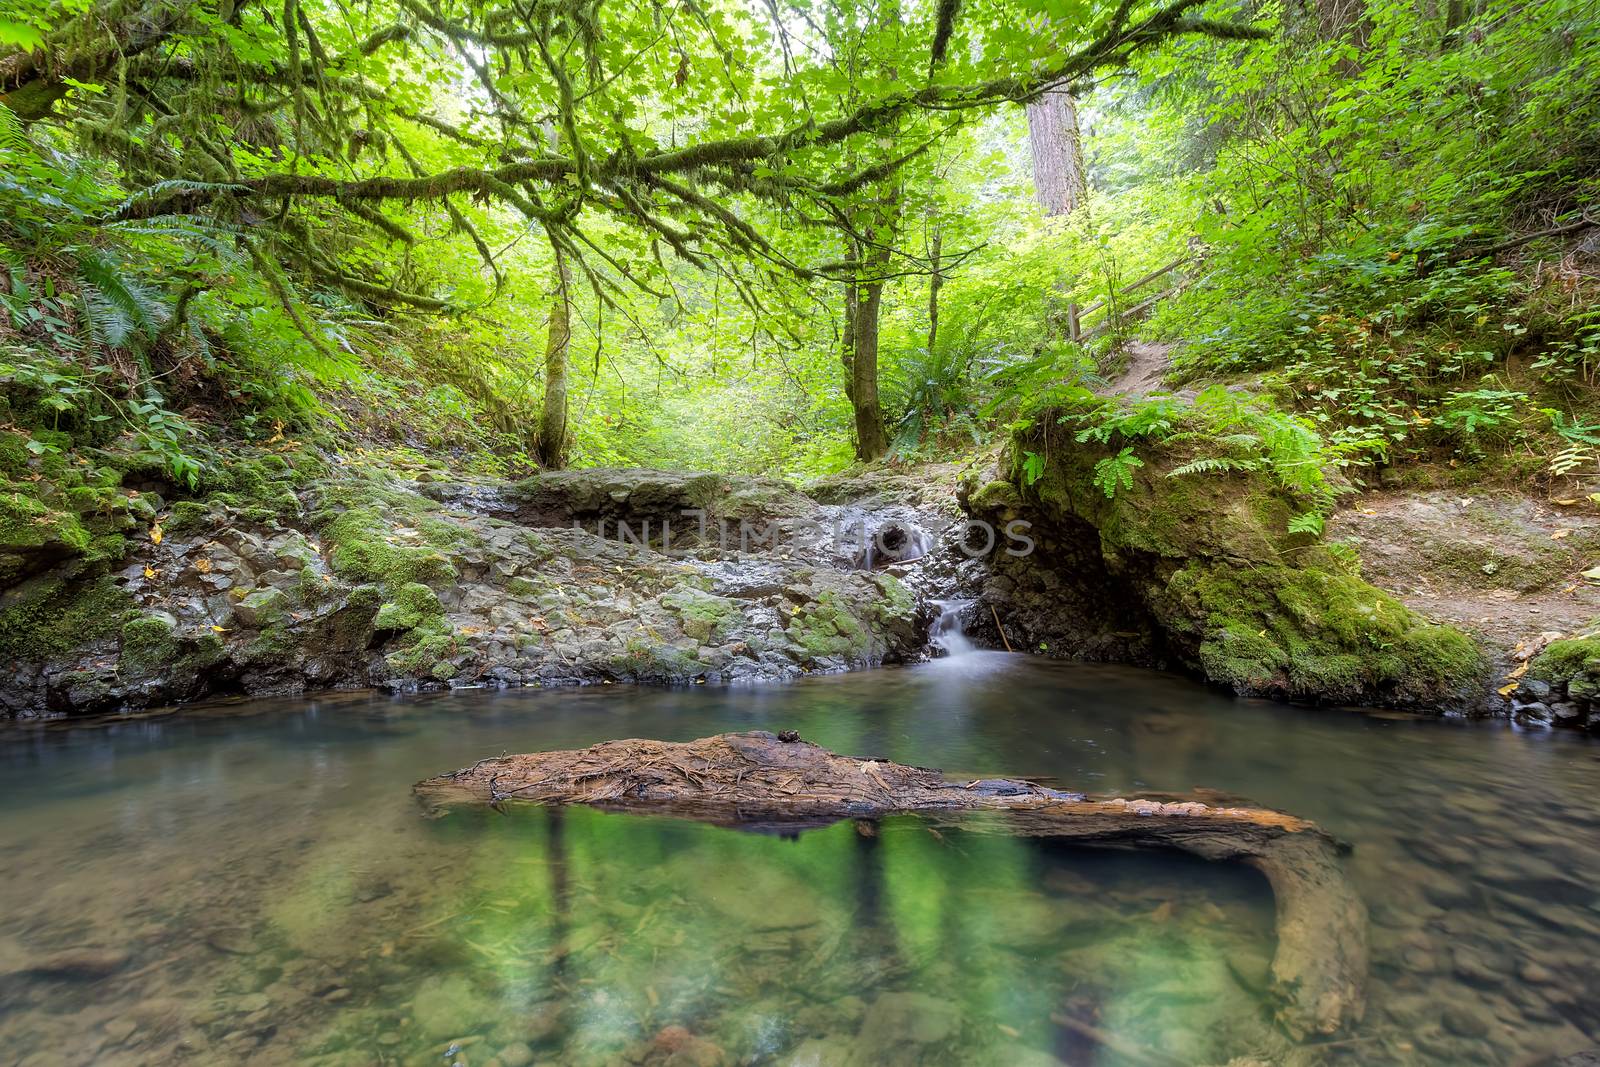 Balch Creek along Wildwood Trail by jpldesigns